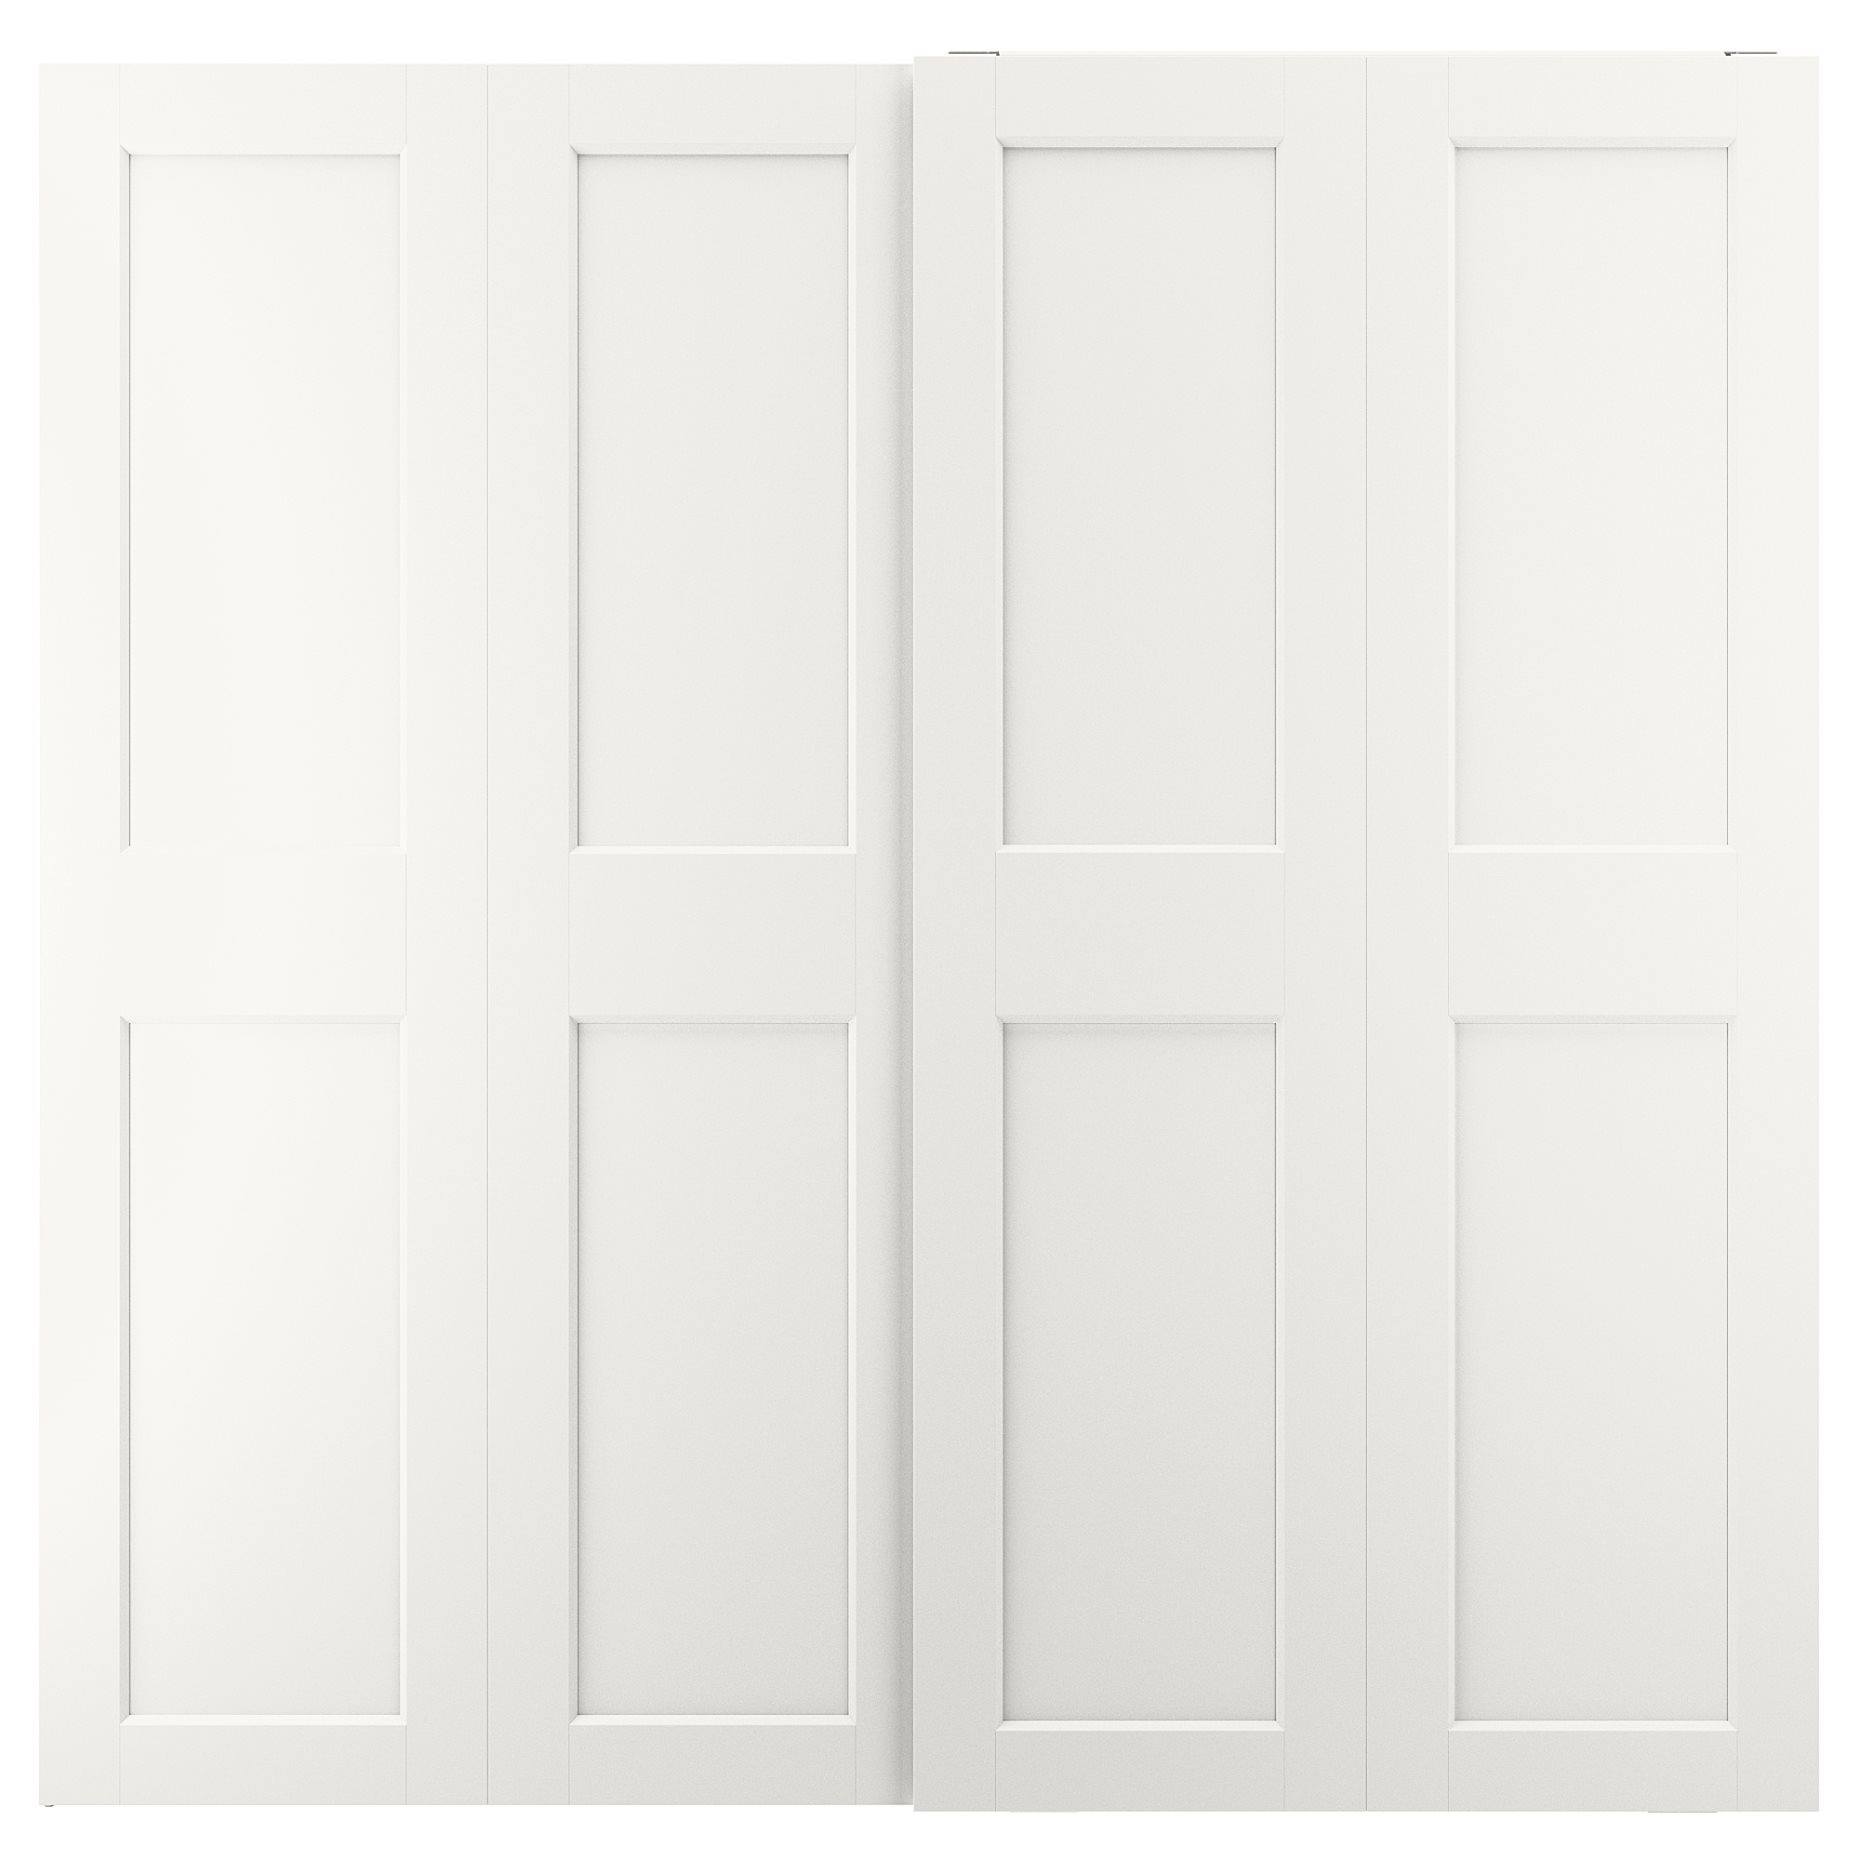 GRIMO, pair of sliding doors, 200x201 cm, 404.976.49